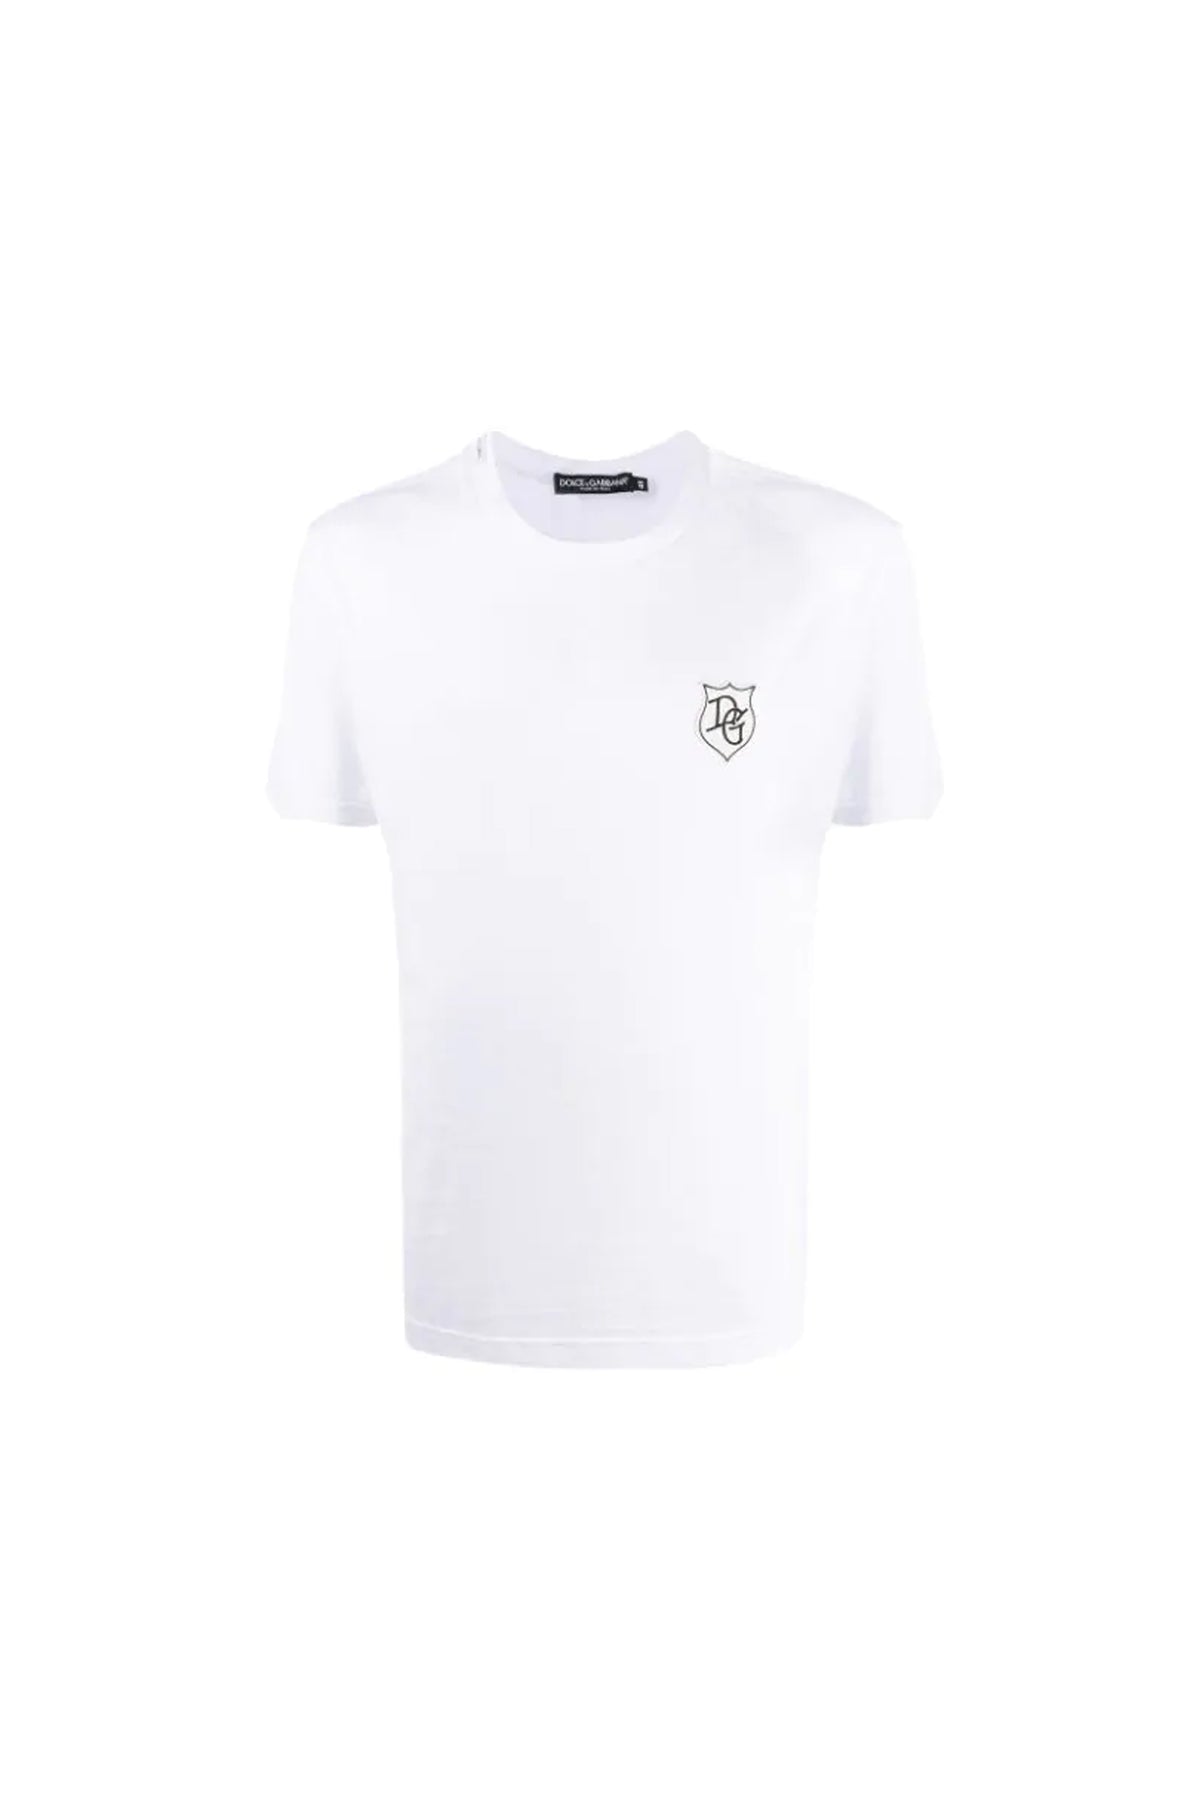 Dolce & Gabbana logo patch T-shirt